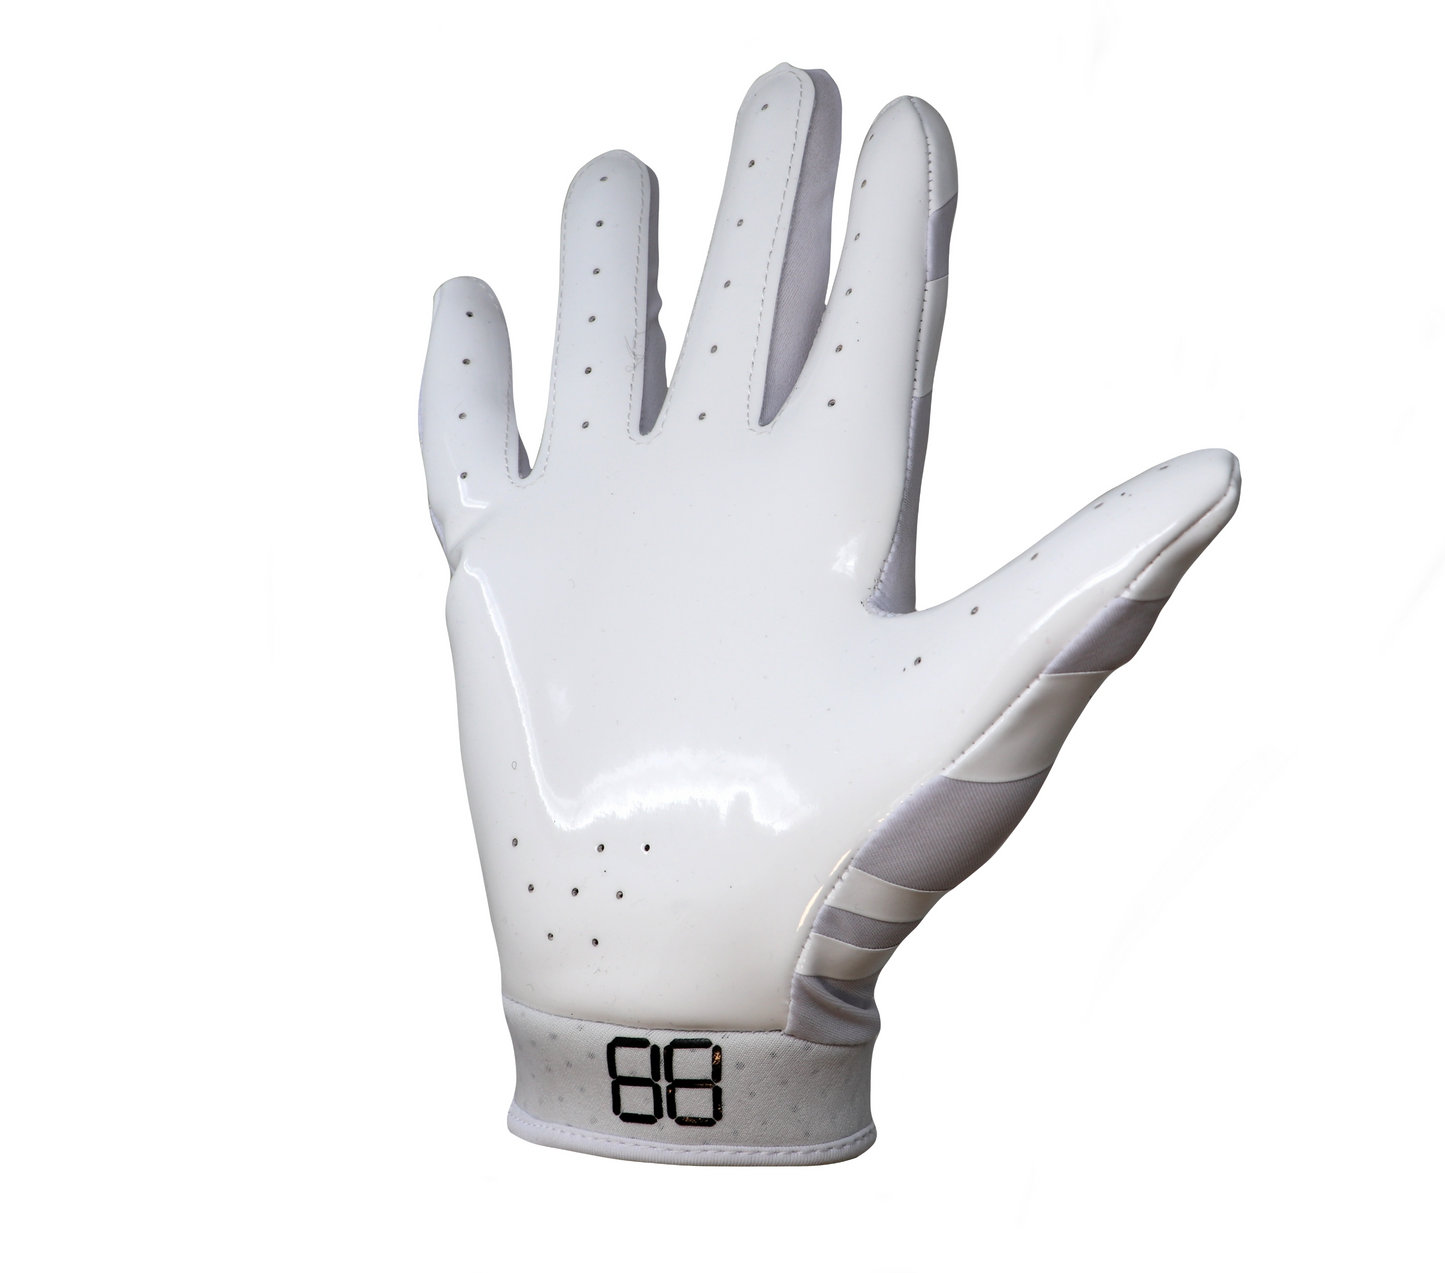 FRG-03 The best receiver football gloves, White